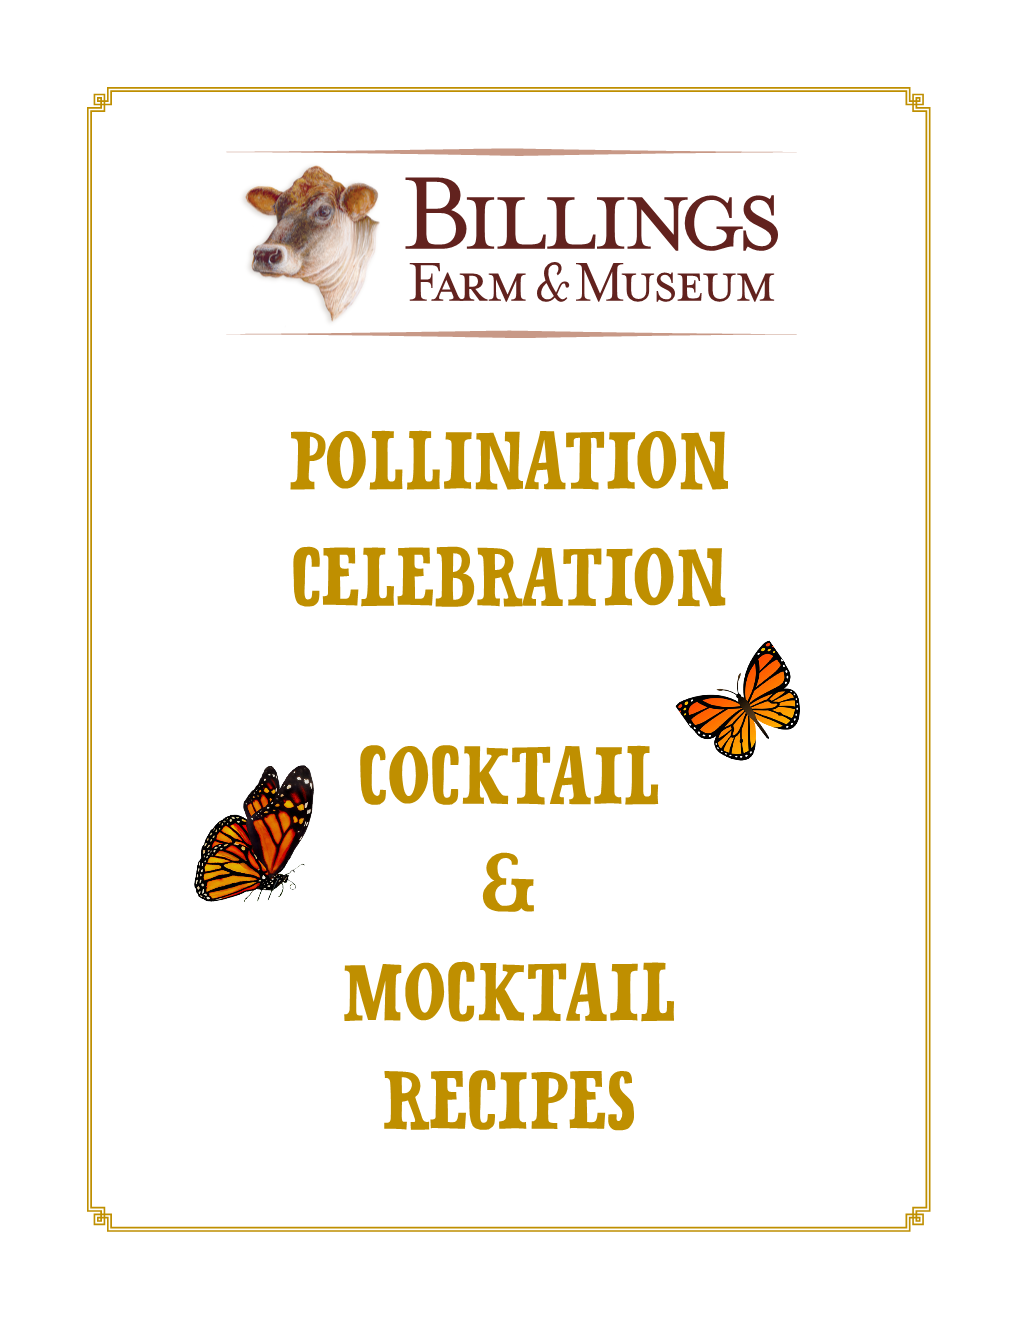 Pollination Celebration Cocktail & Mocktail Recipes